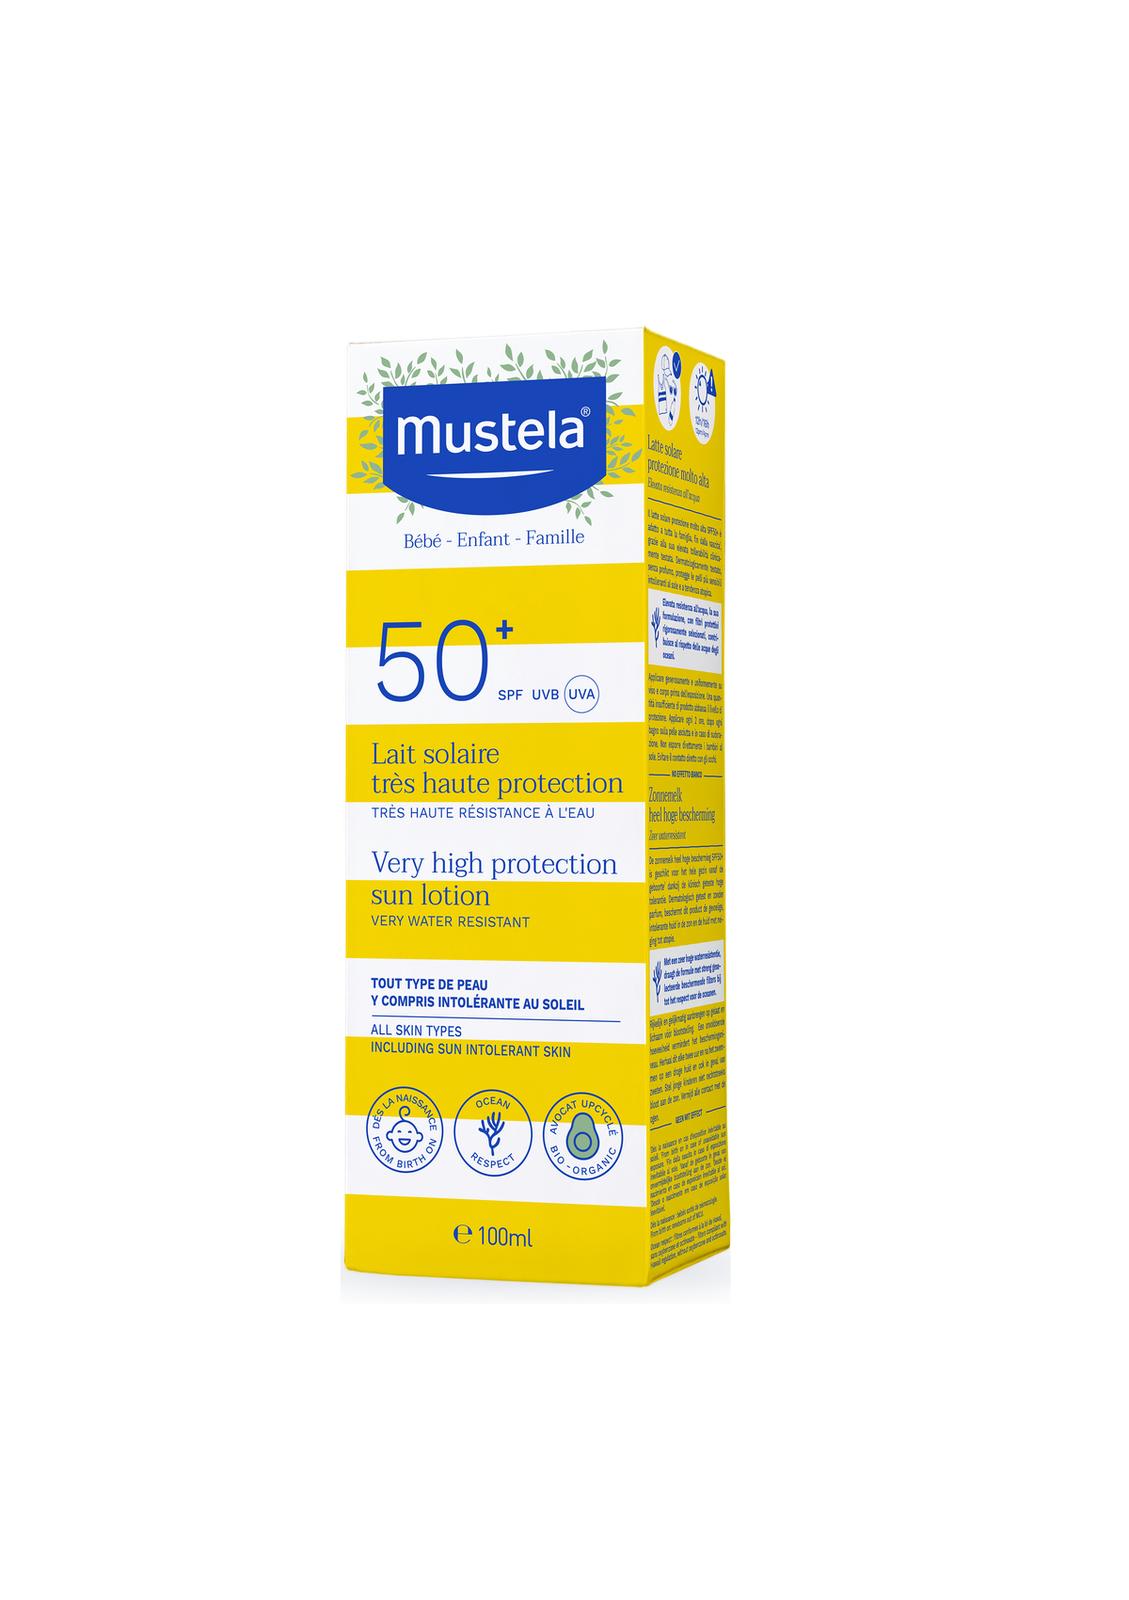 Fluido detergente s/r 300ml - Mustela - Prénatal